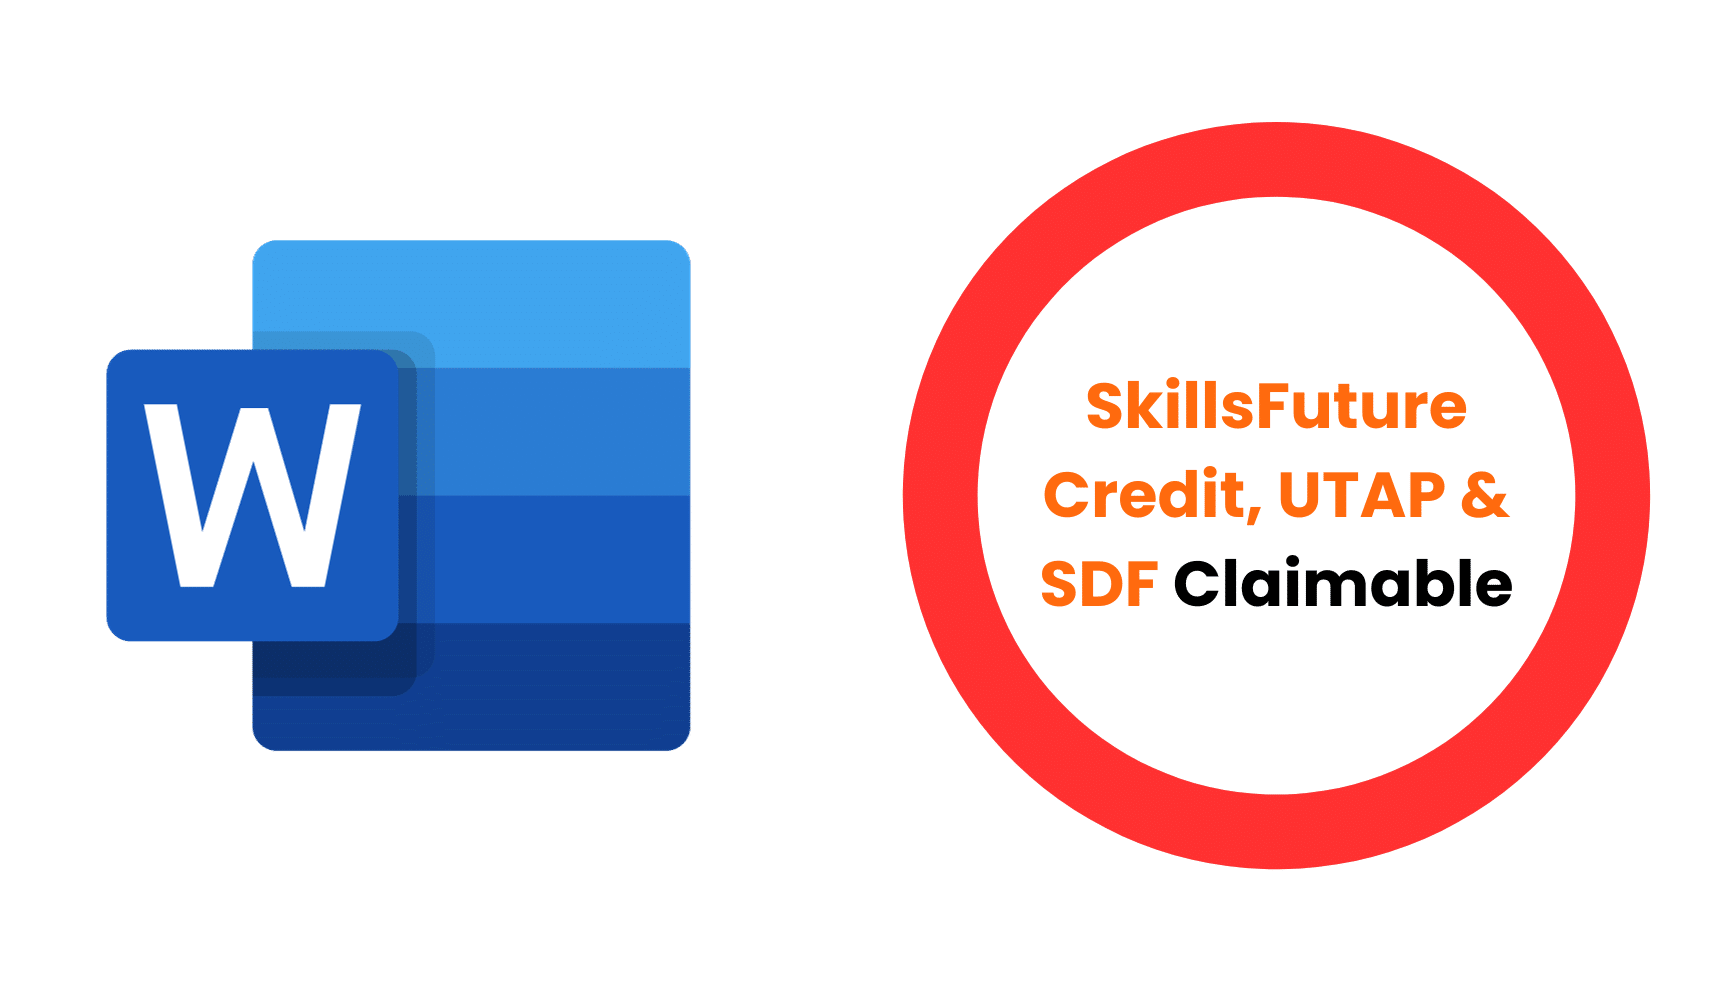 Microsoft Word Courses Singapore - SkillsFuture Credit, UTAP & SDF Claimable